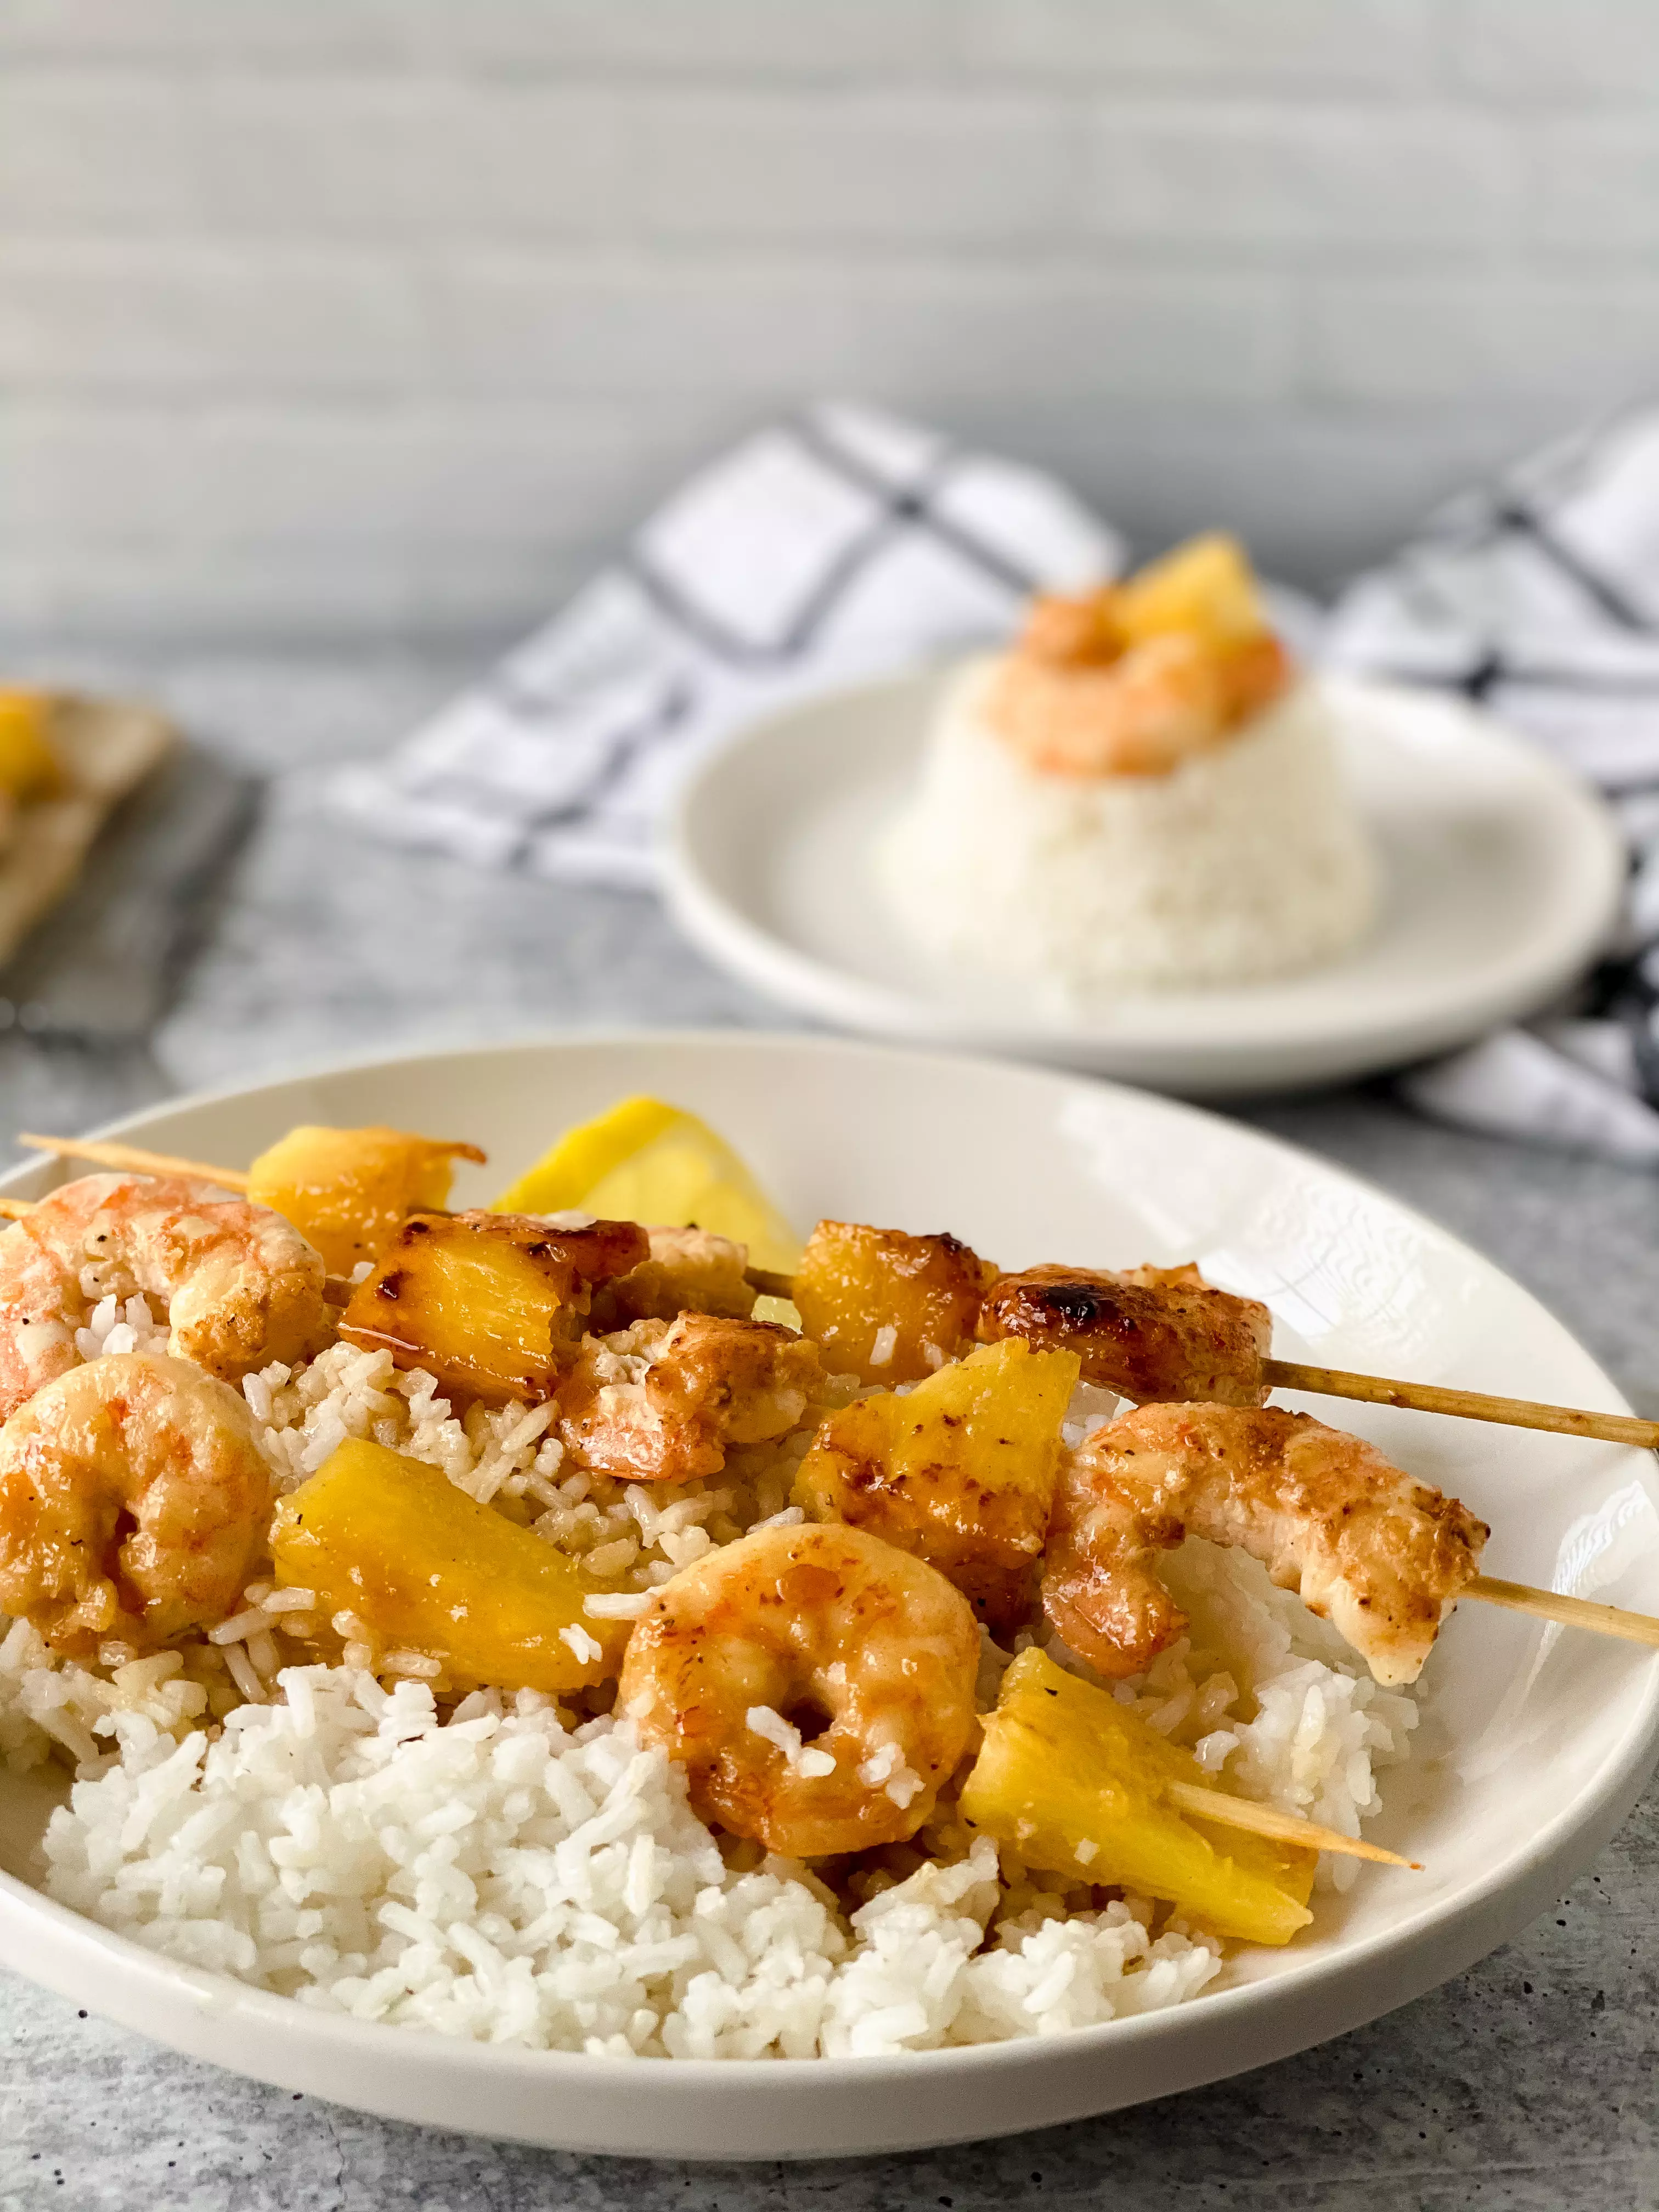 prepared honey garlic shrimp skewers on a bed of rice